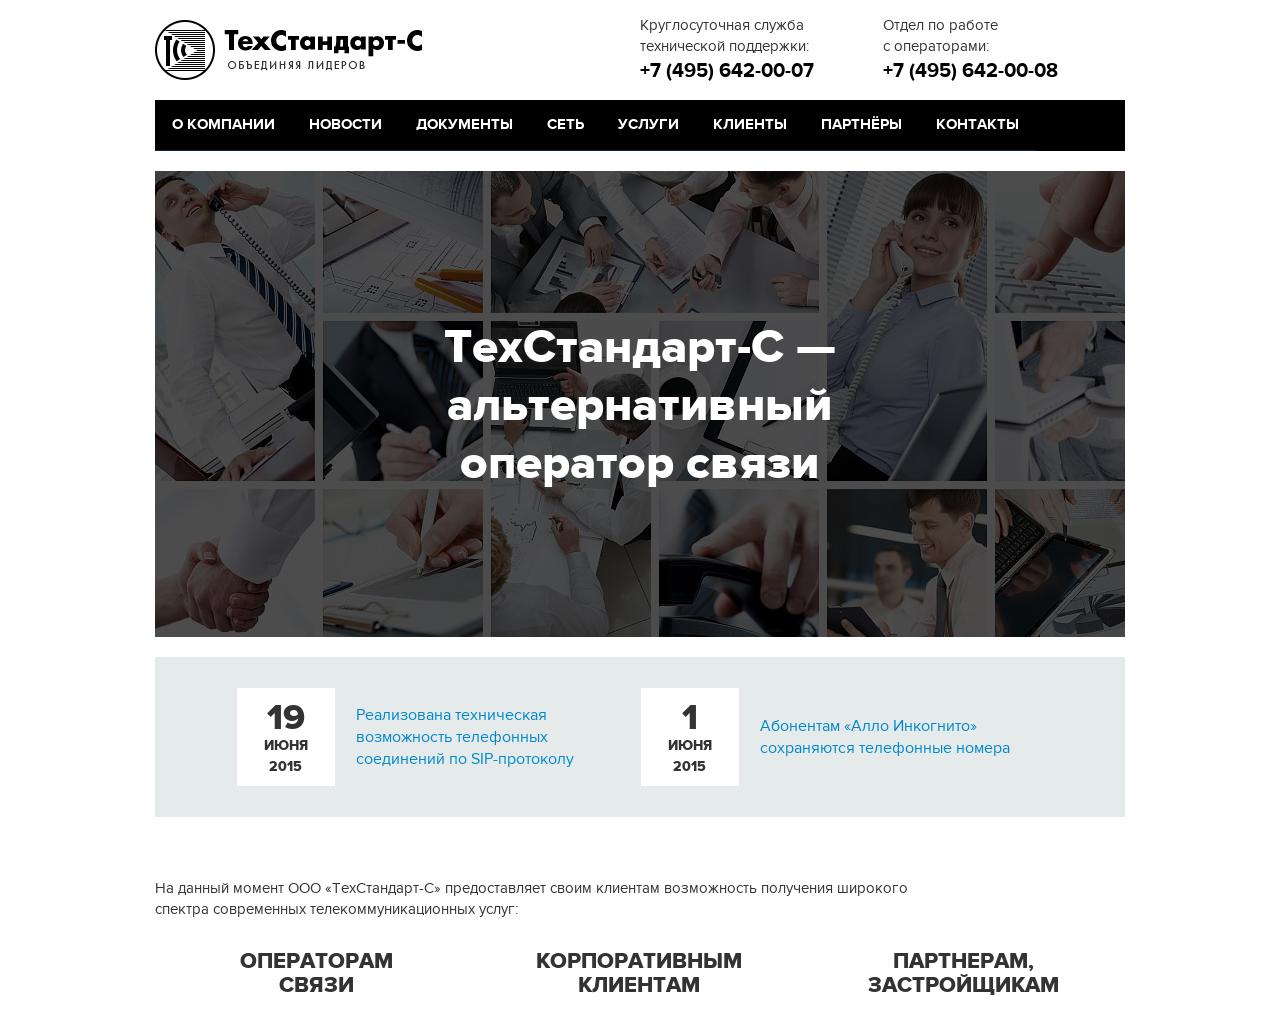 Изображение сайта tssnet.ru в разрешении 1280x1024